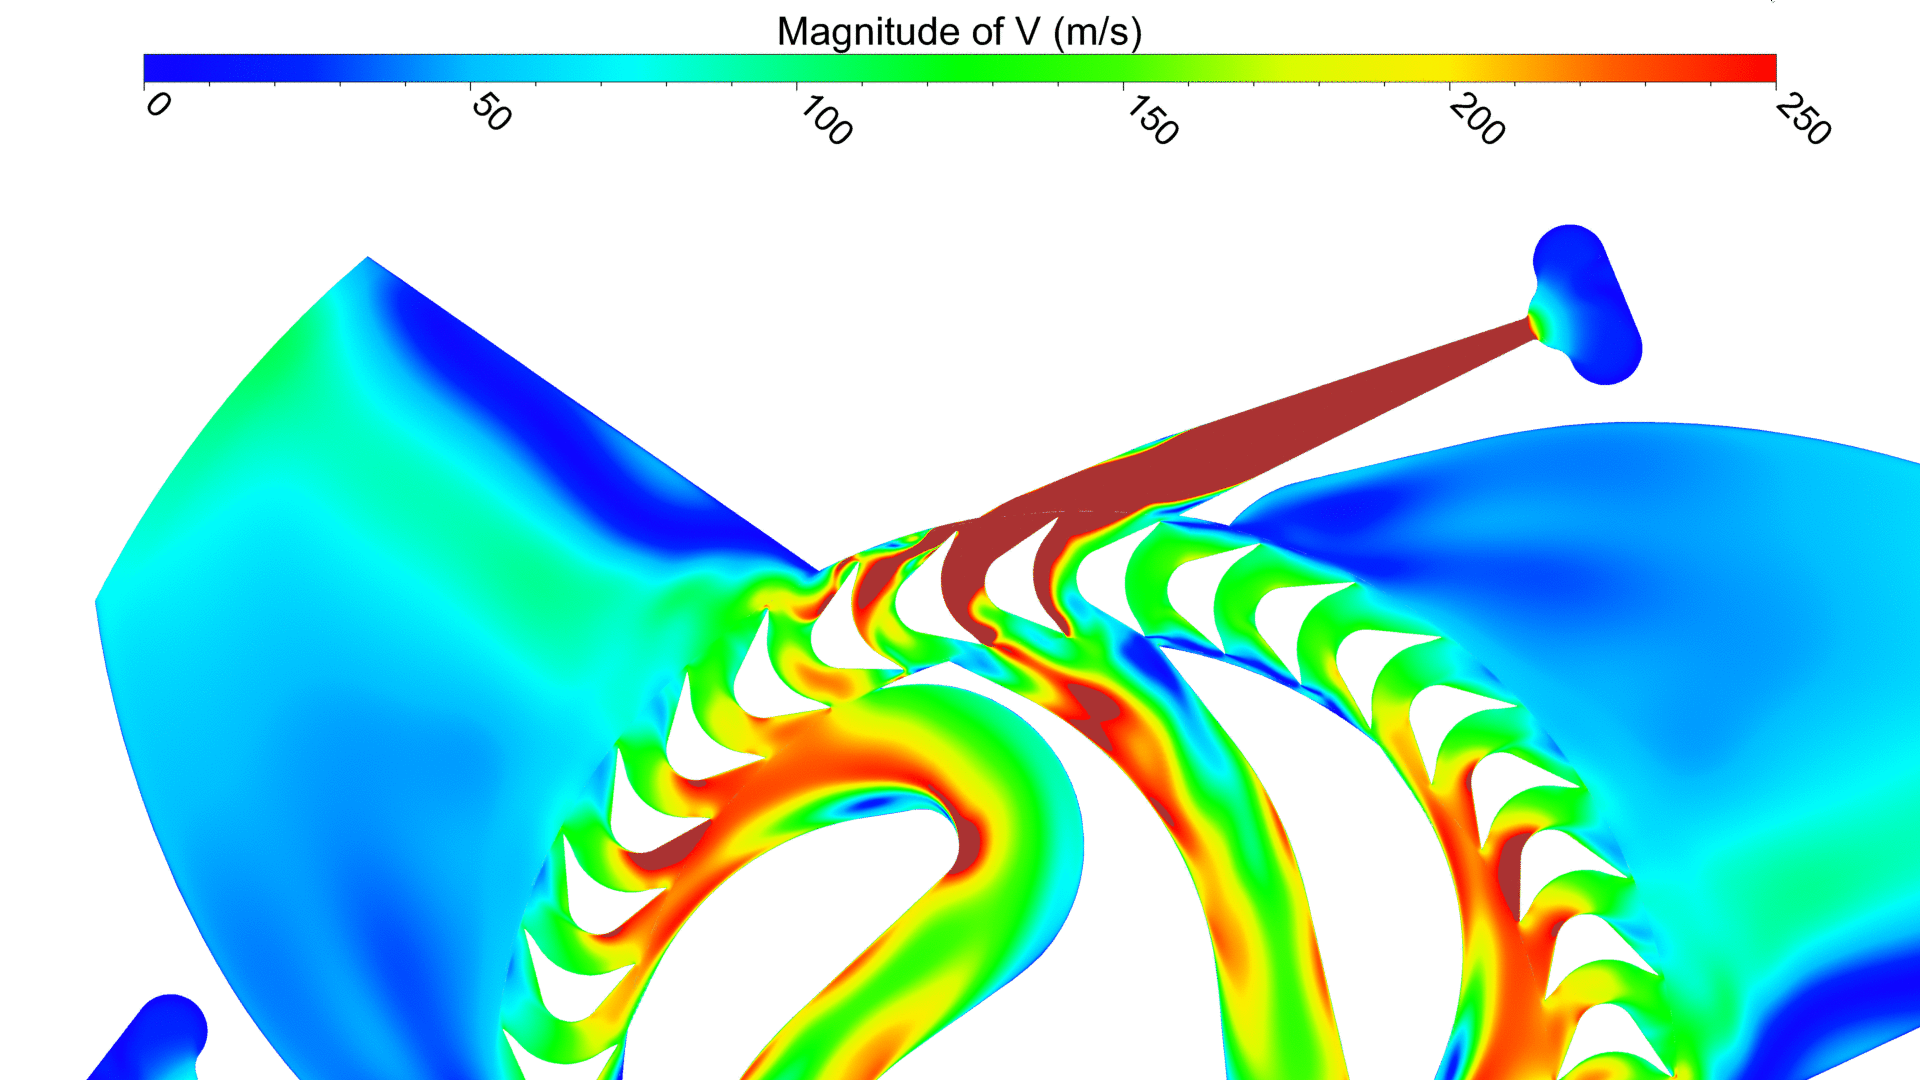 Figure 1: Magnitude of velocity